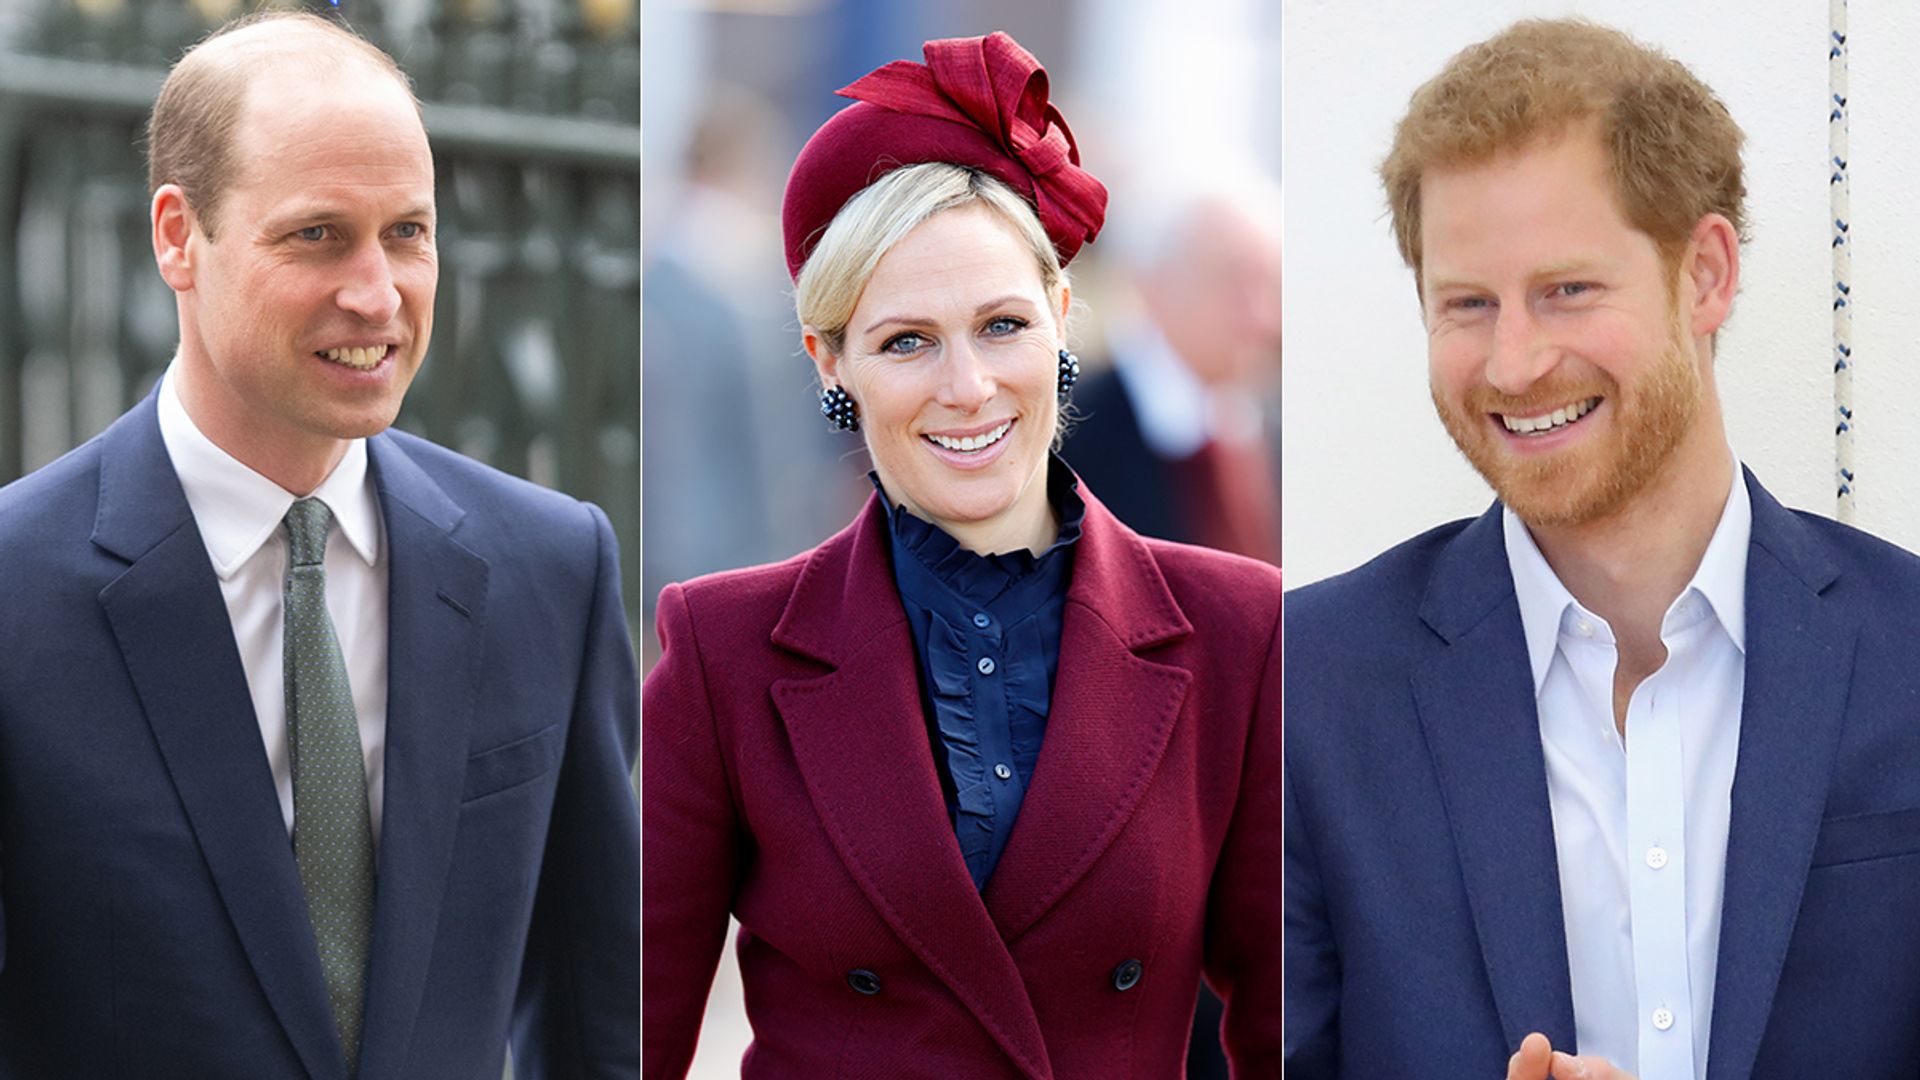 Prince William, Zara Tindall and Prince Harry